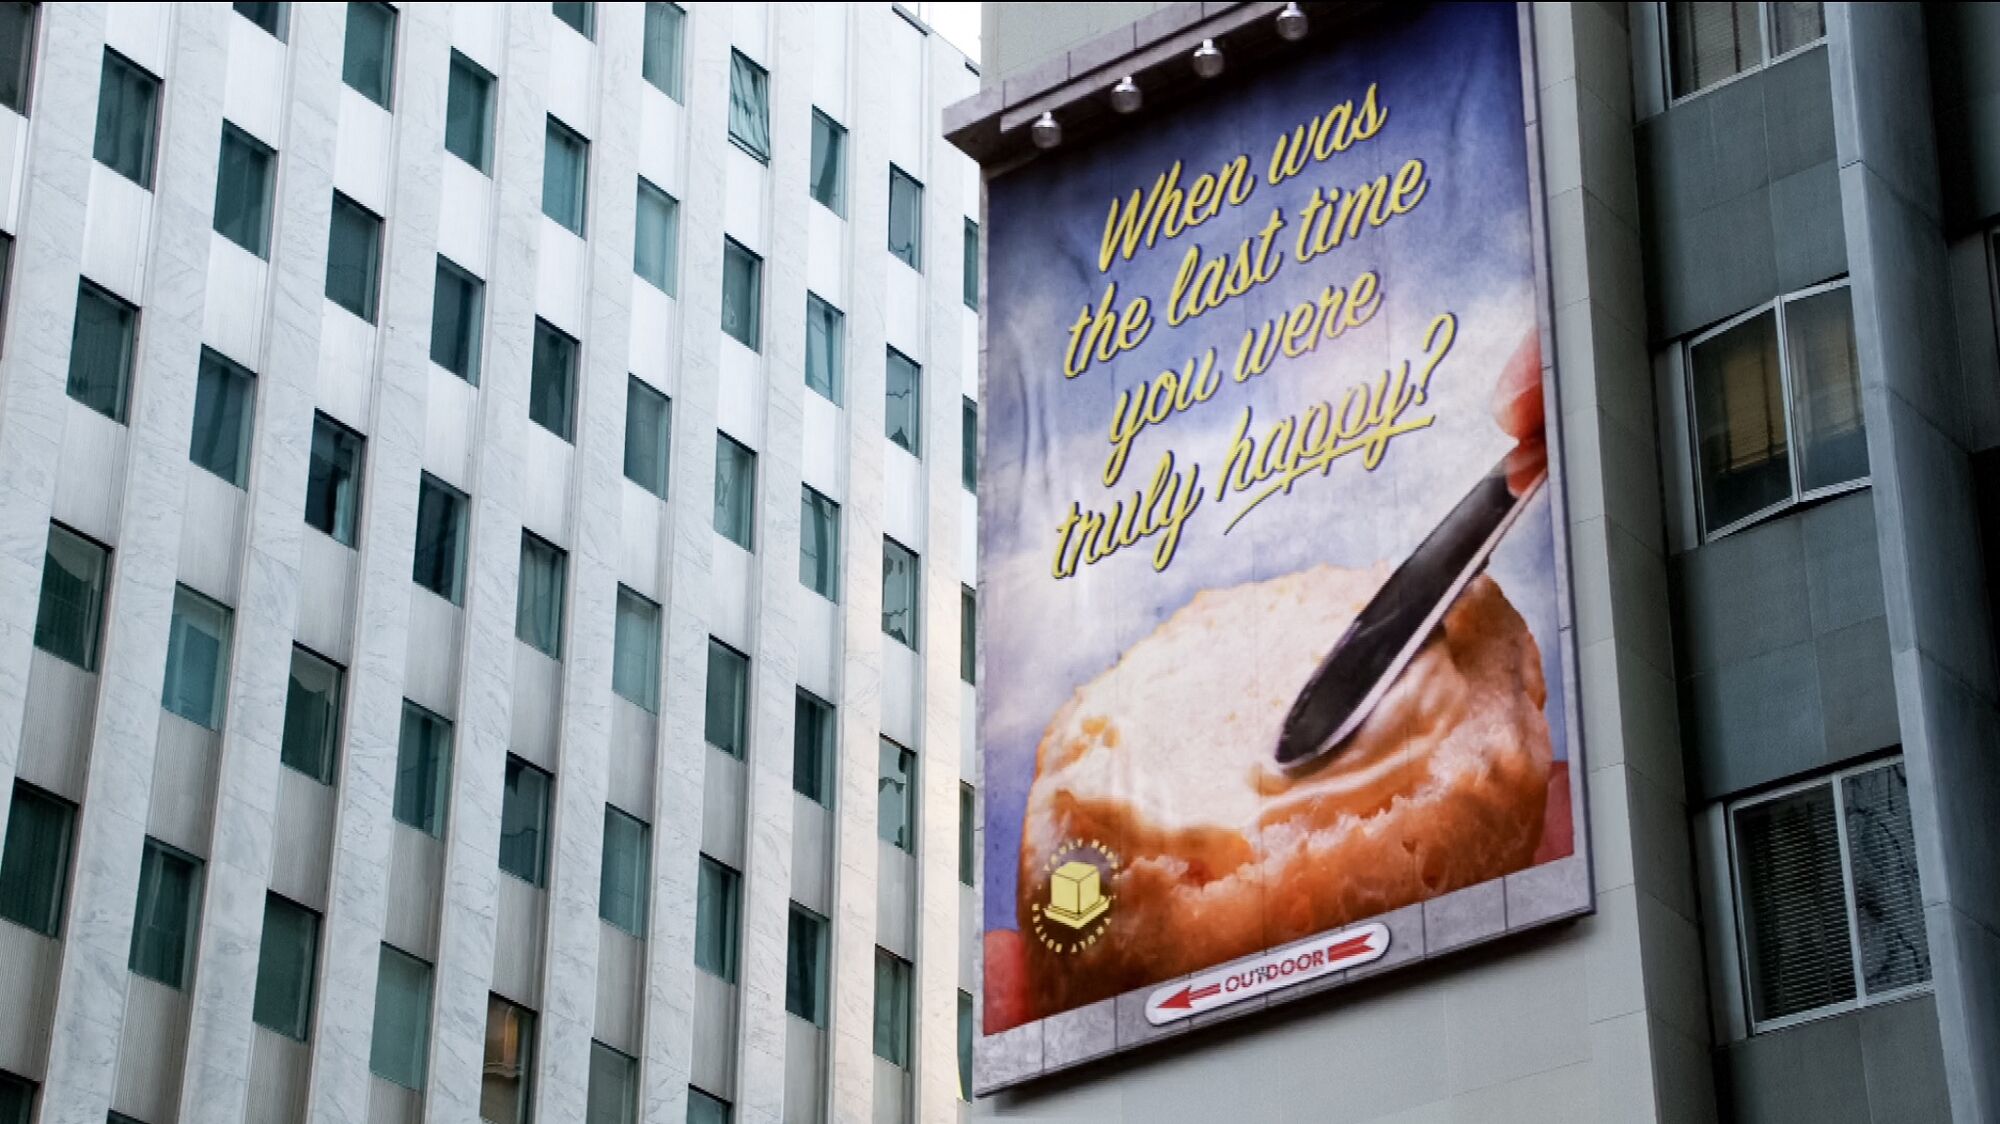 Butter ad campaign | Crazy Ex-Girlfriend Wiki | Fandom